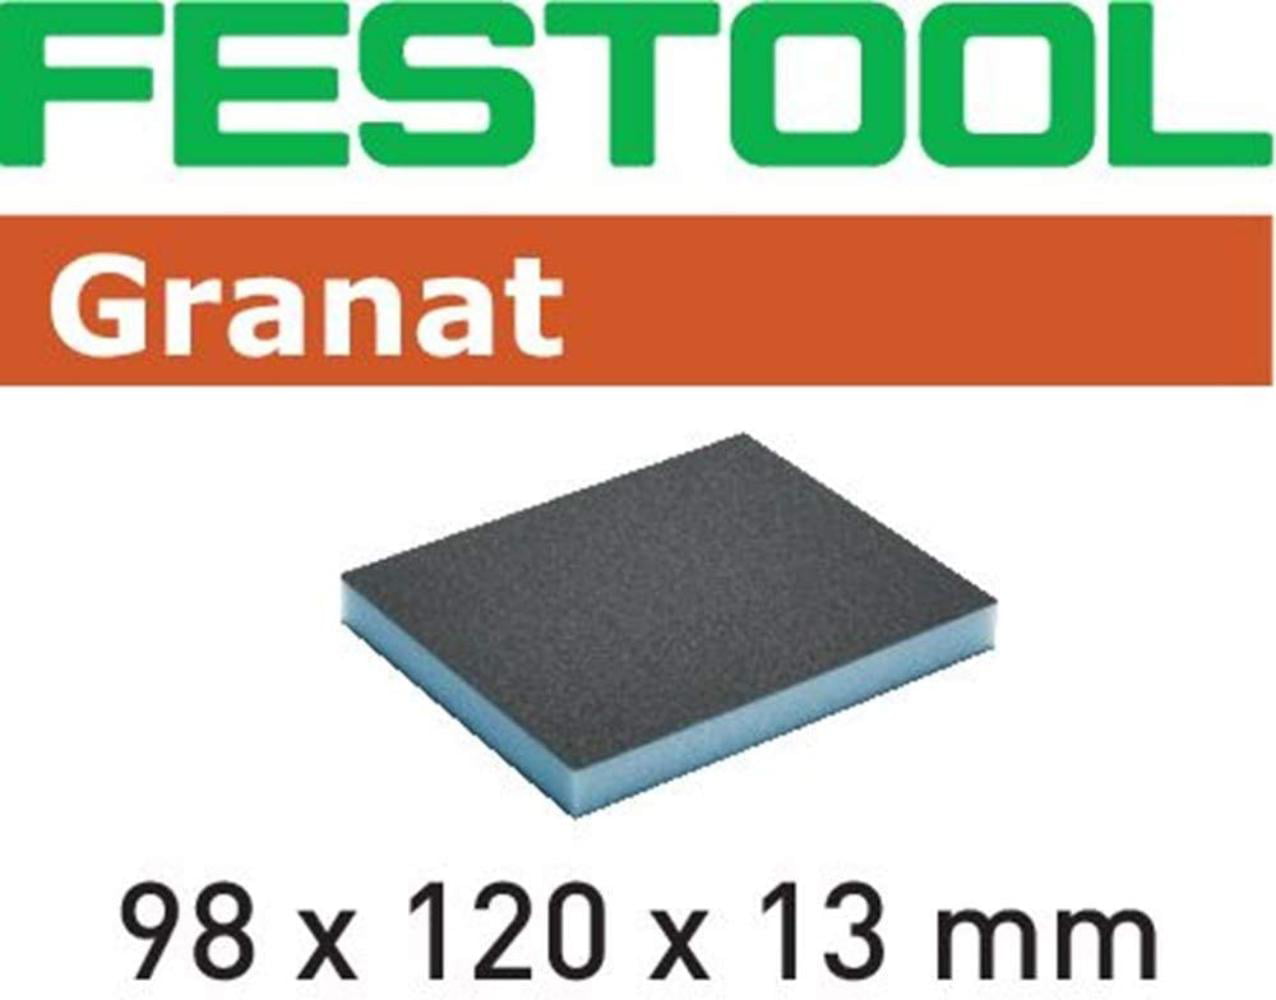 Festool 201112 GRANAT Abrasive Sponge 